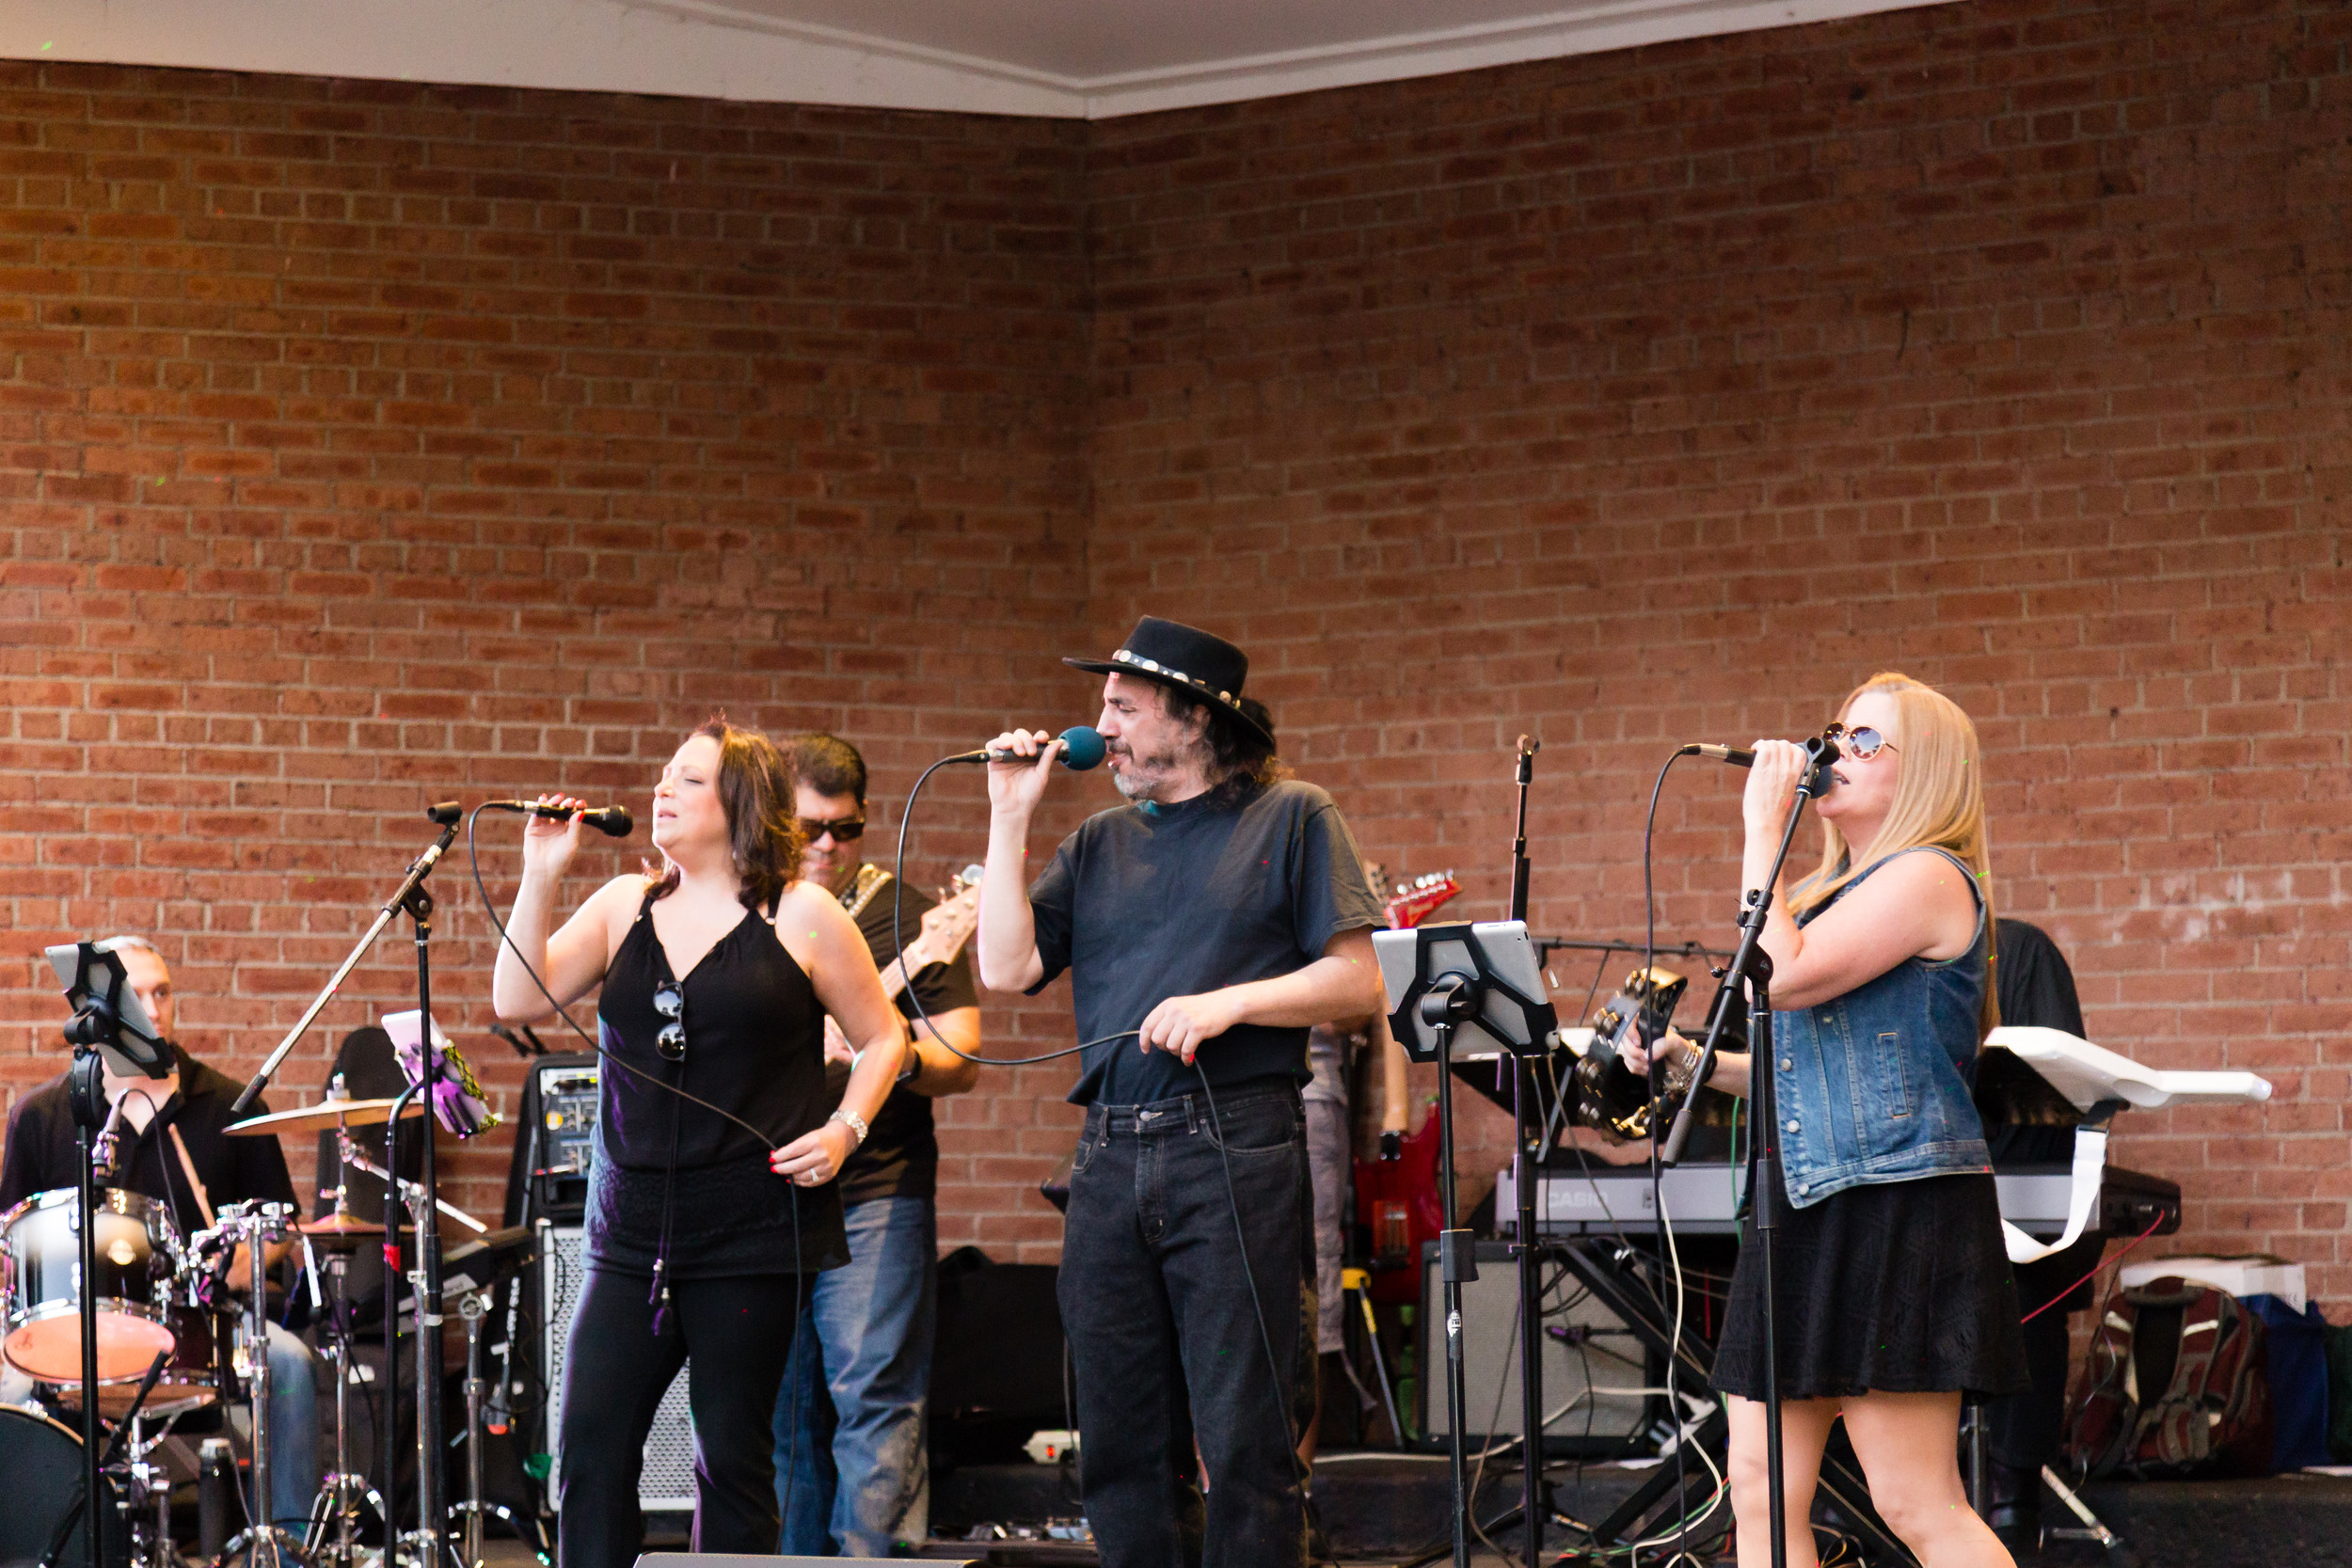 Members of  The Steel Silk Band performing at The East Rockaway Summer Concert Series at Memorial Park in East Rockaway, New York on Saturday July 2nd 2016.